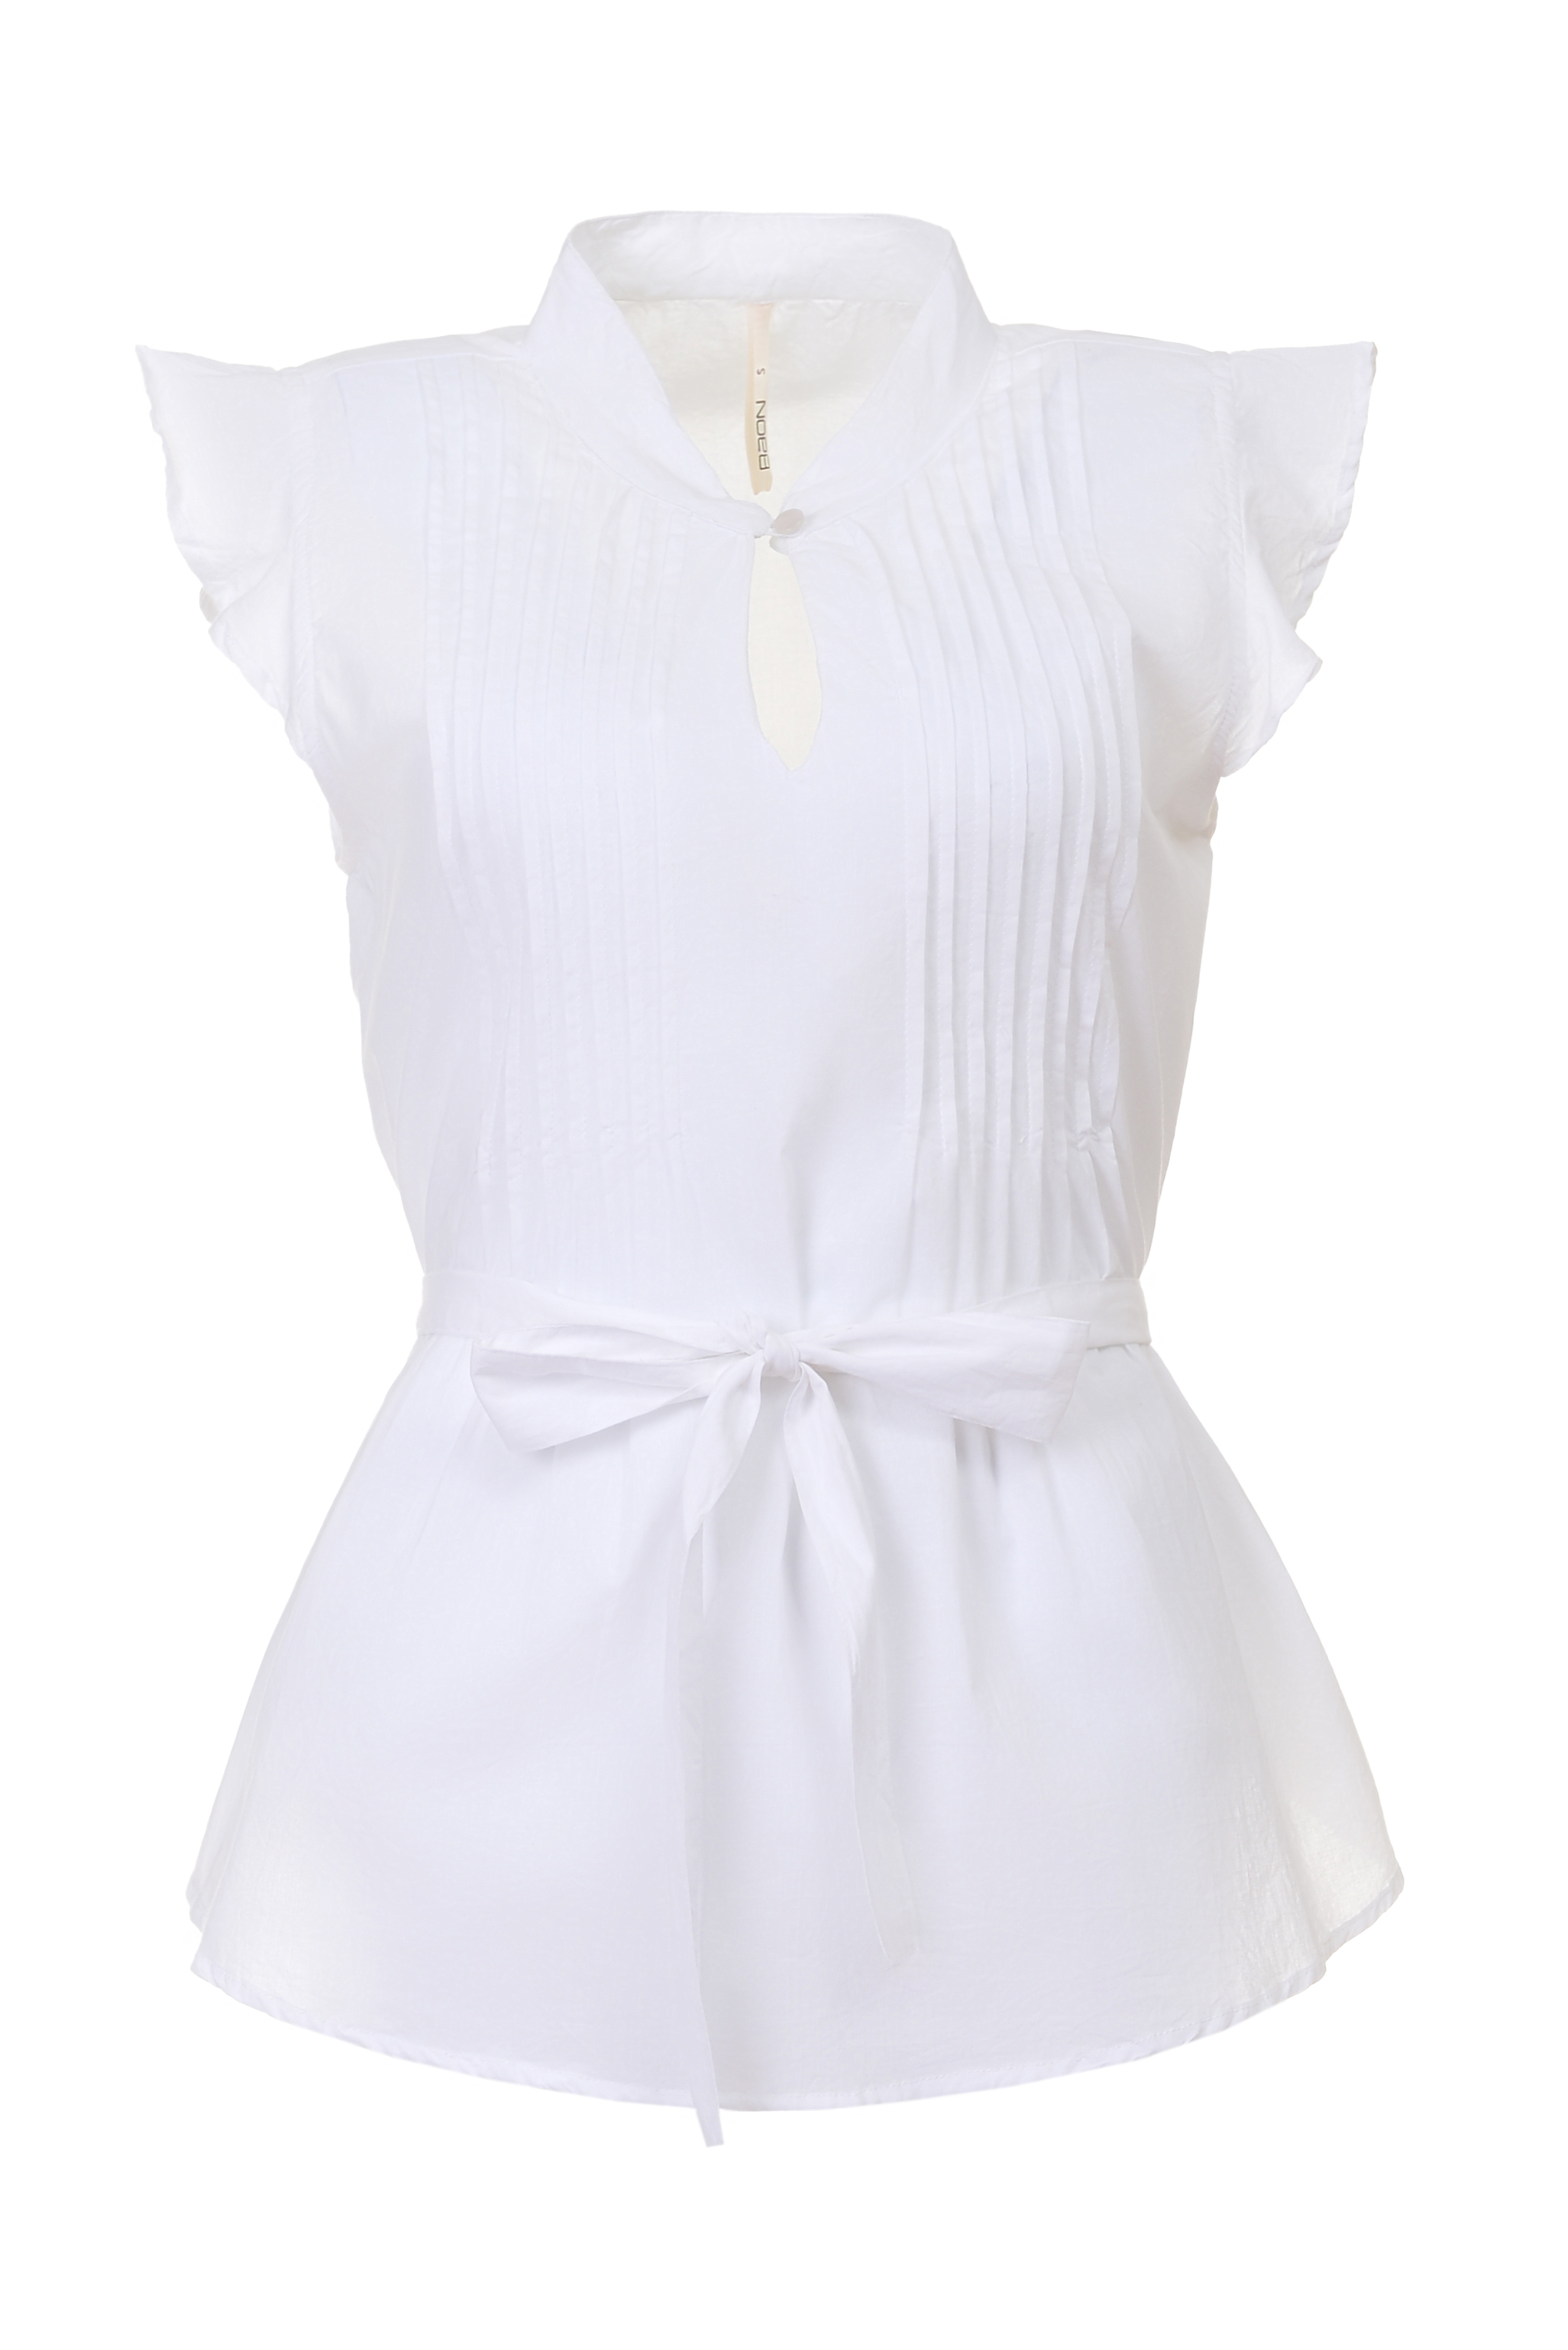 Блузка с поясом (арт. baon B197062), размер XXL, цвет белый Блузка с поясом (арт. baon B197062) - фото 3